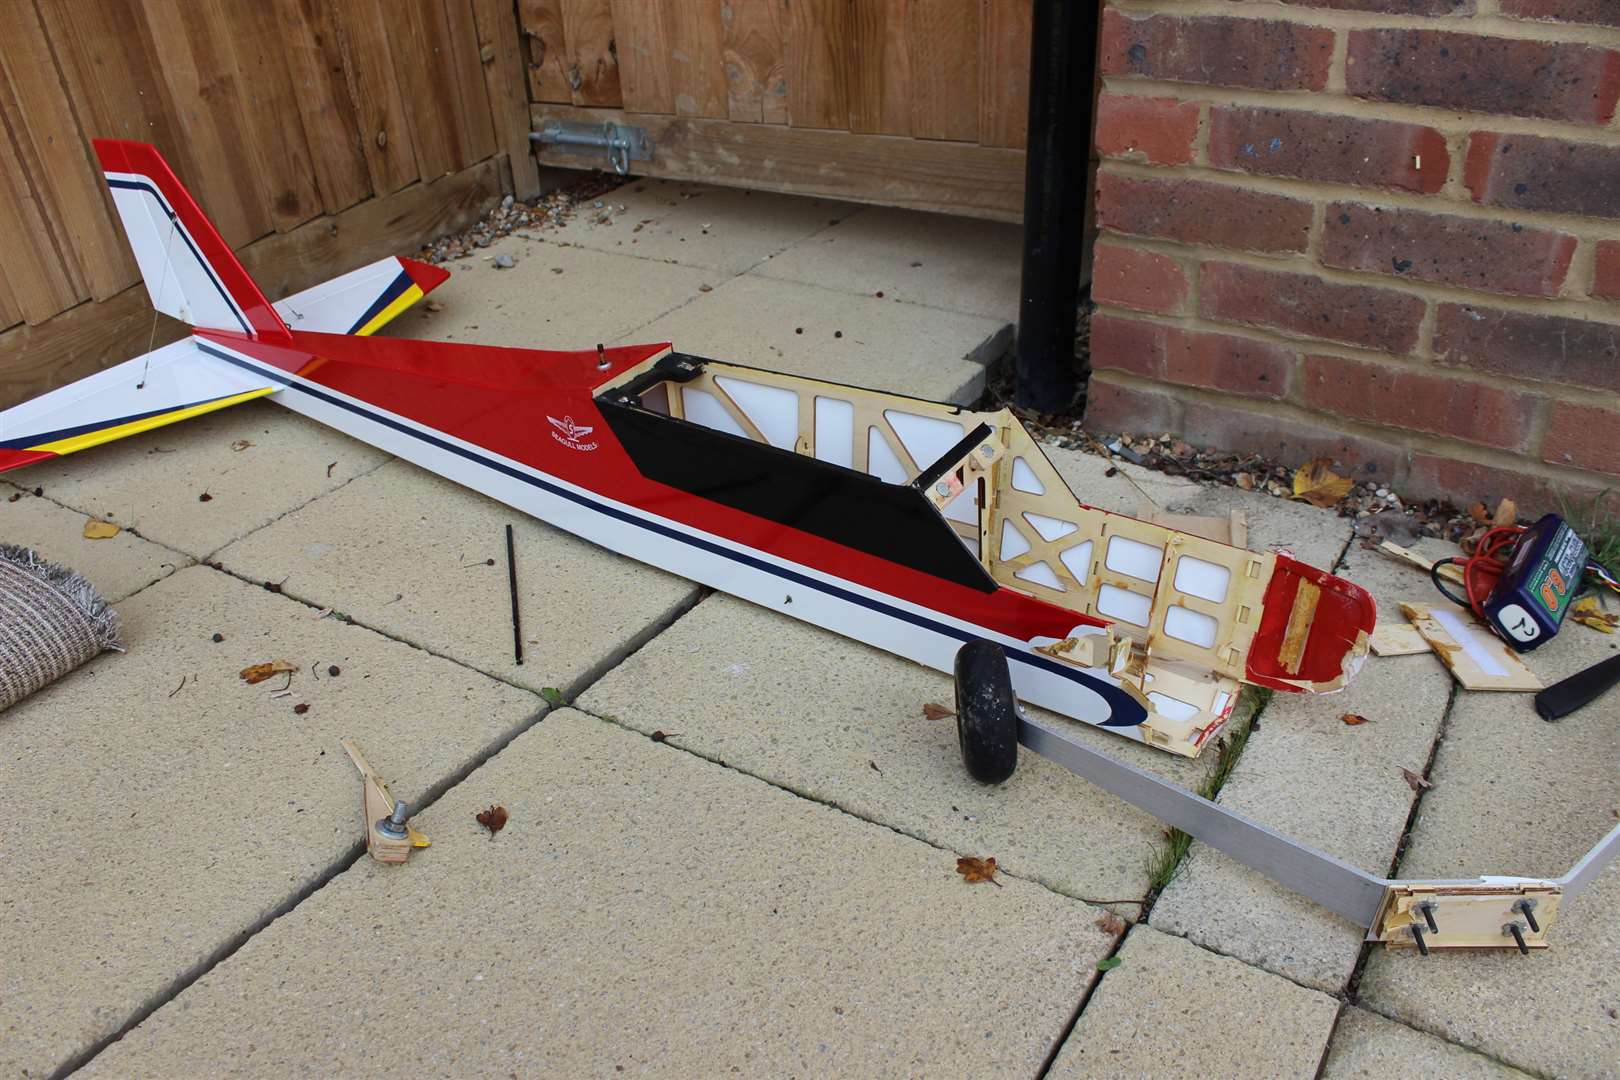 Damaged: Model plane